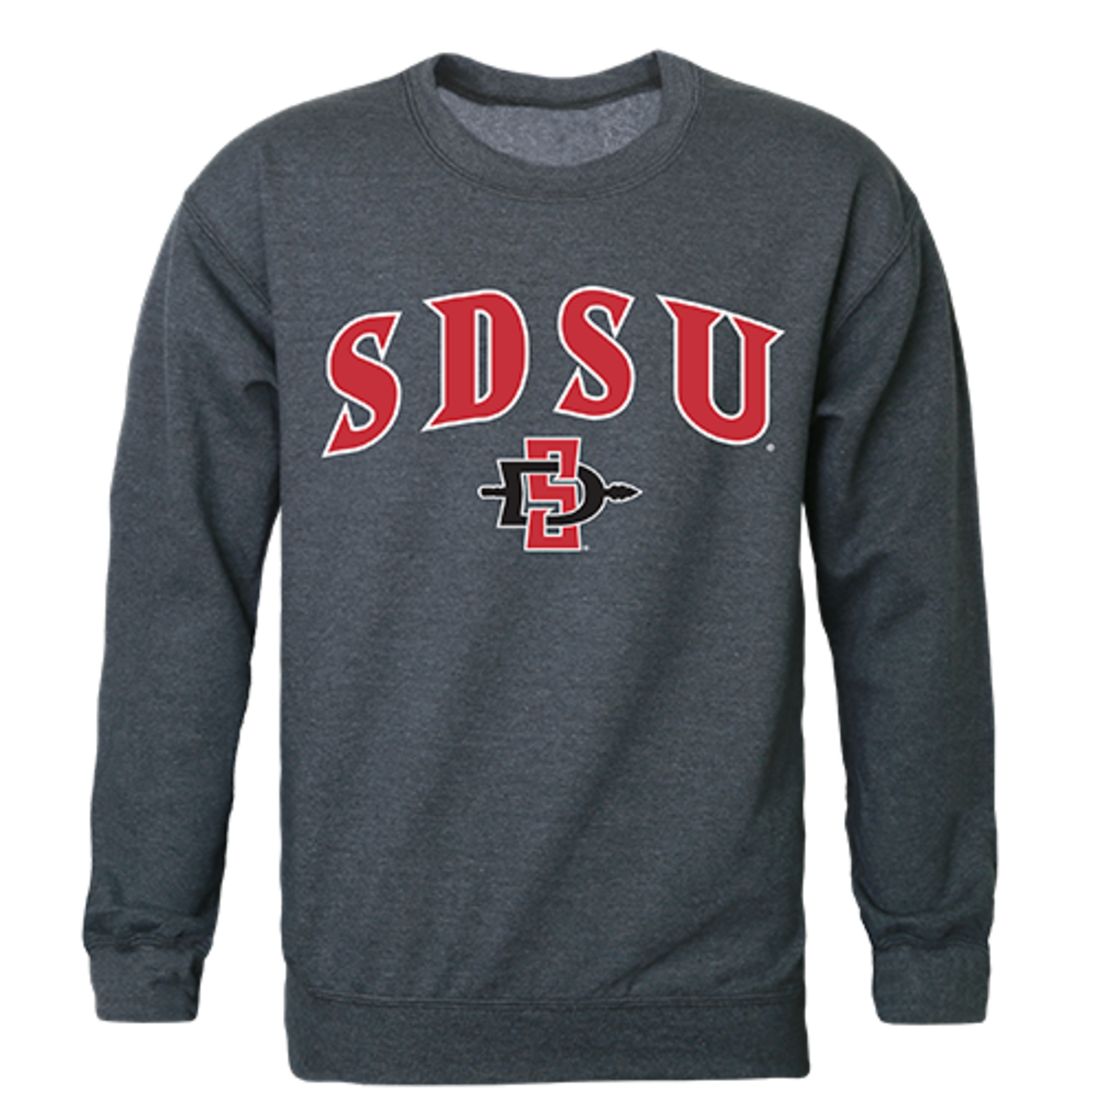 SDSU San Diego State University Campus Crewneck Pullover Sweatshirt Sweater Heather Charcoal-Campus-Wardrobe